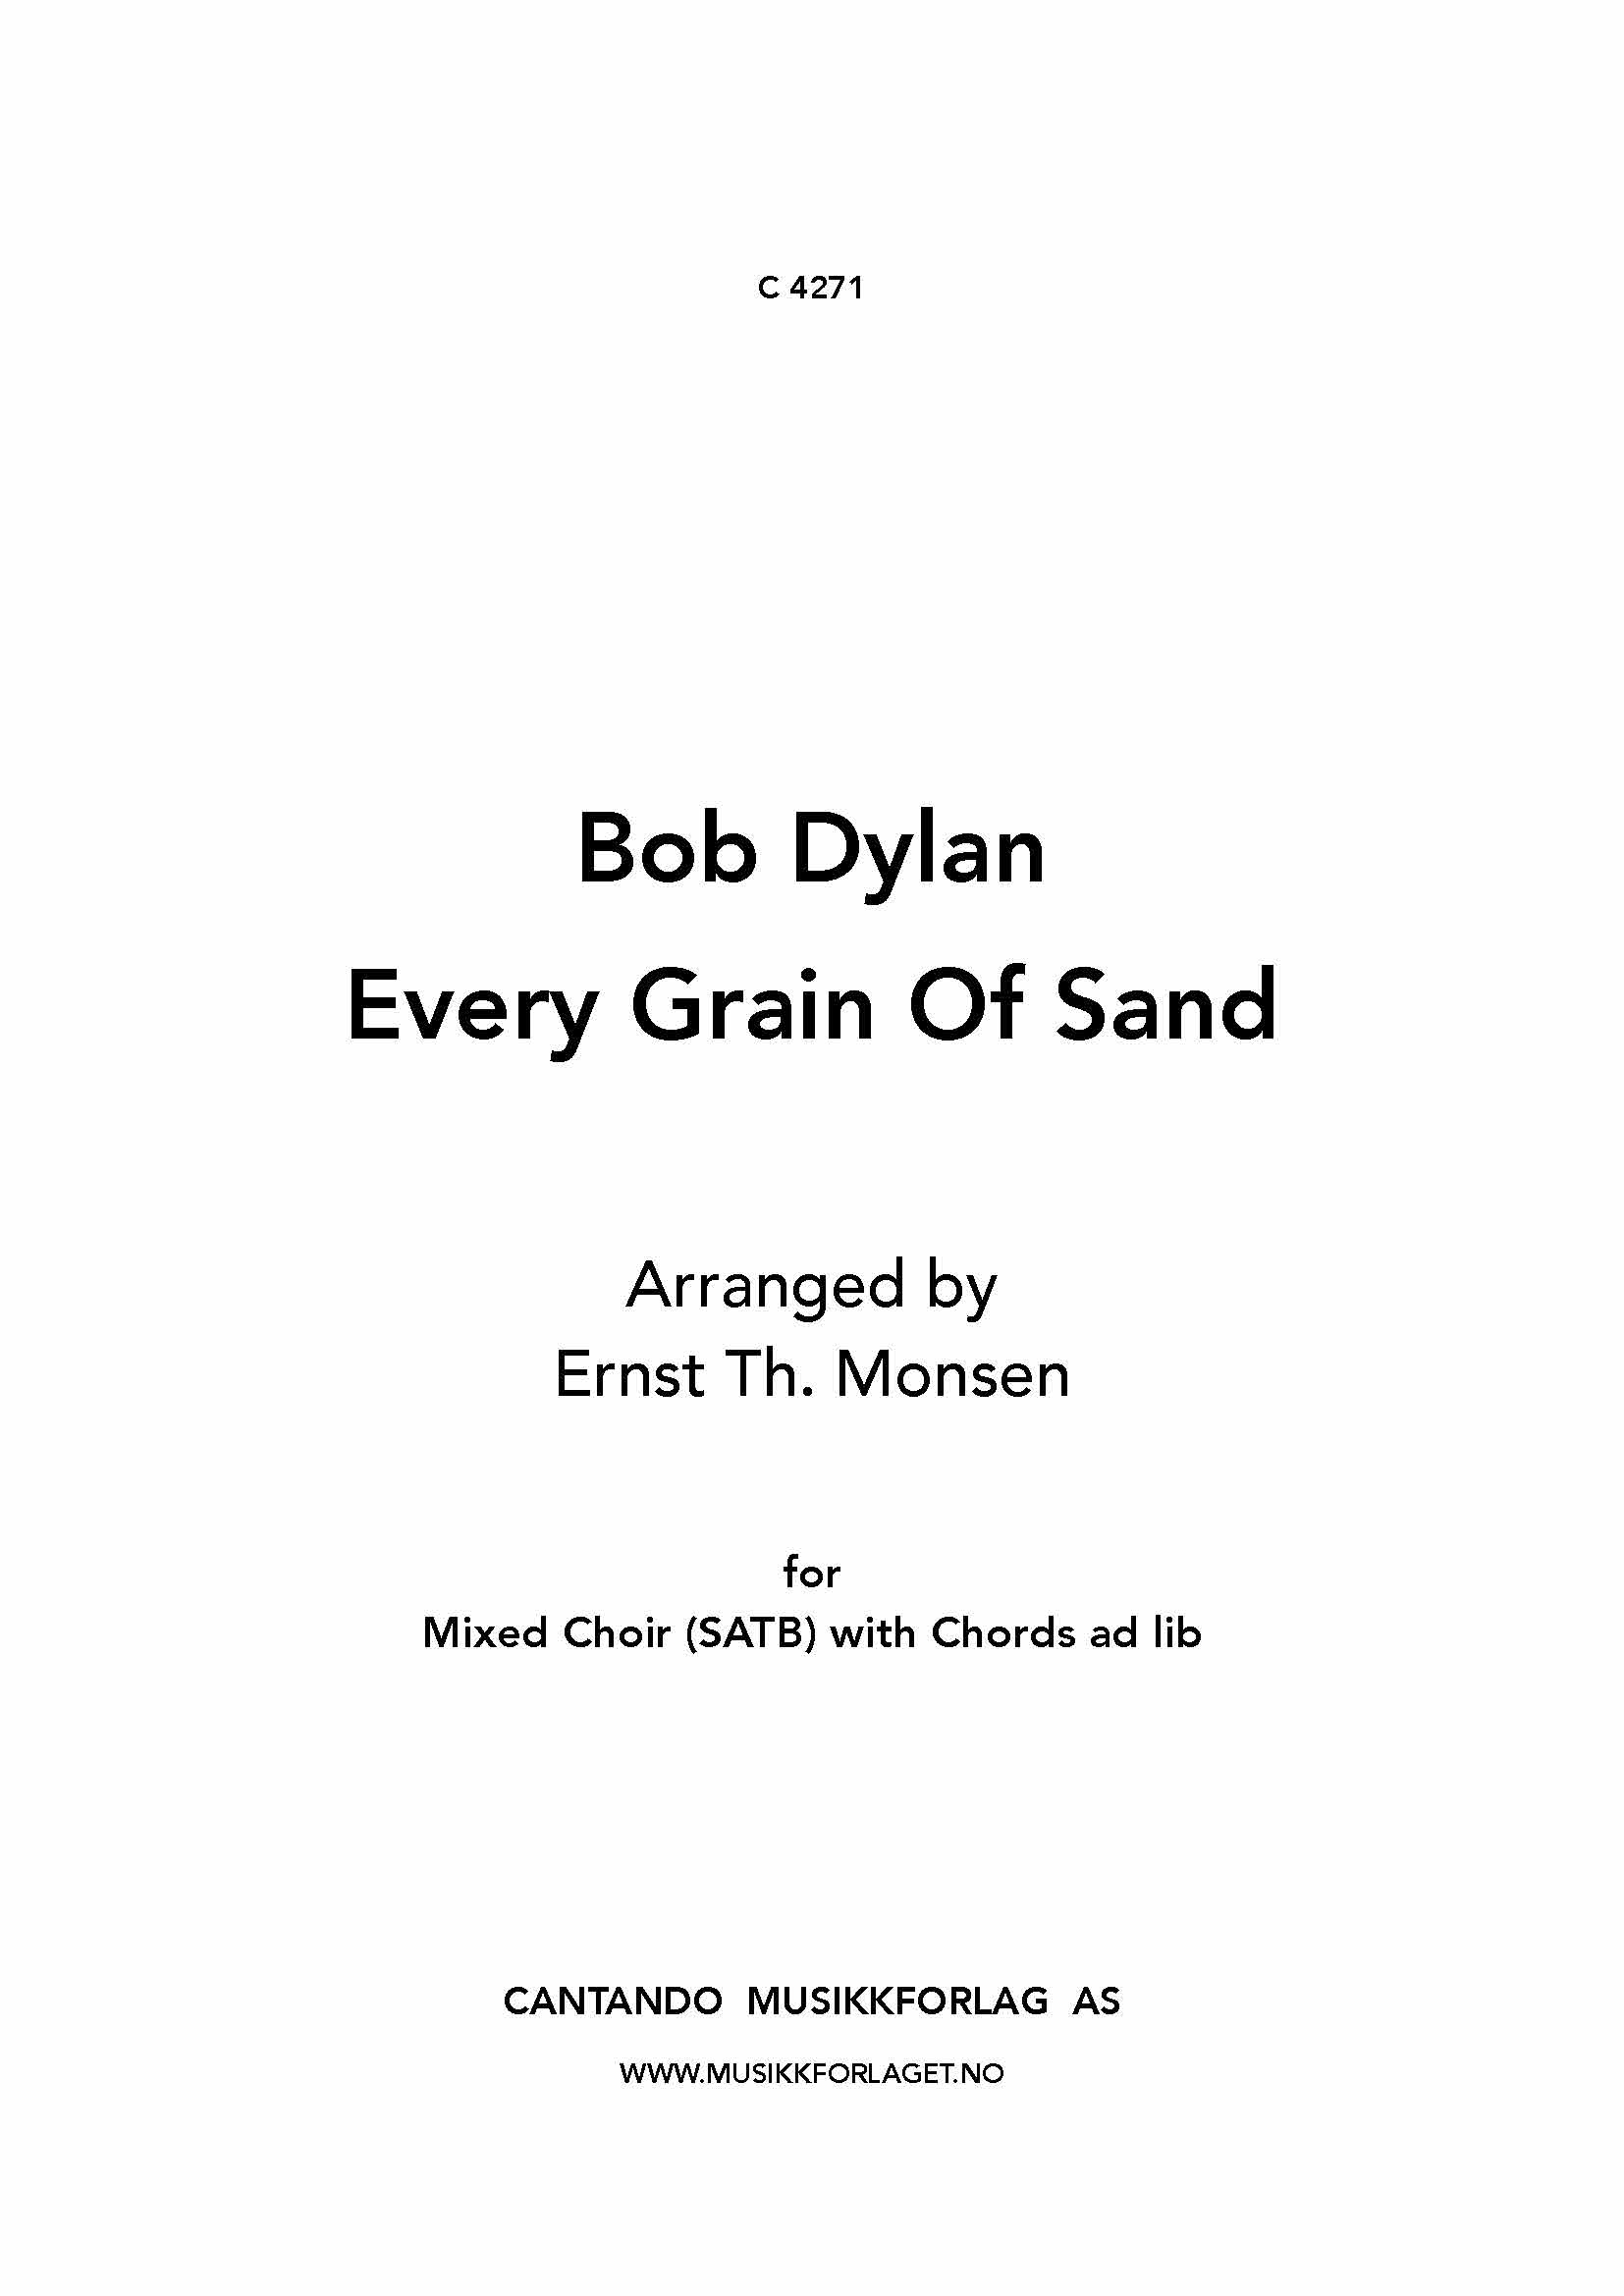 Every Grain Of Sand